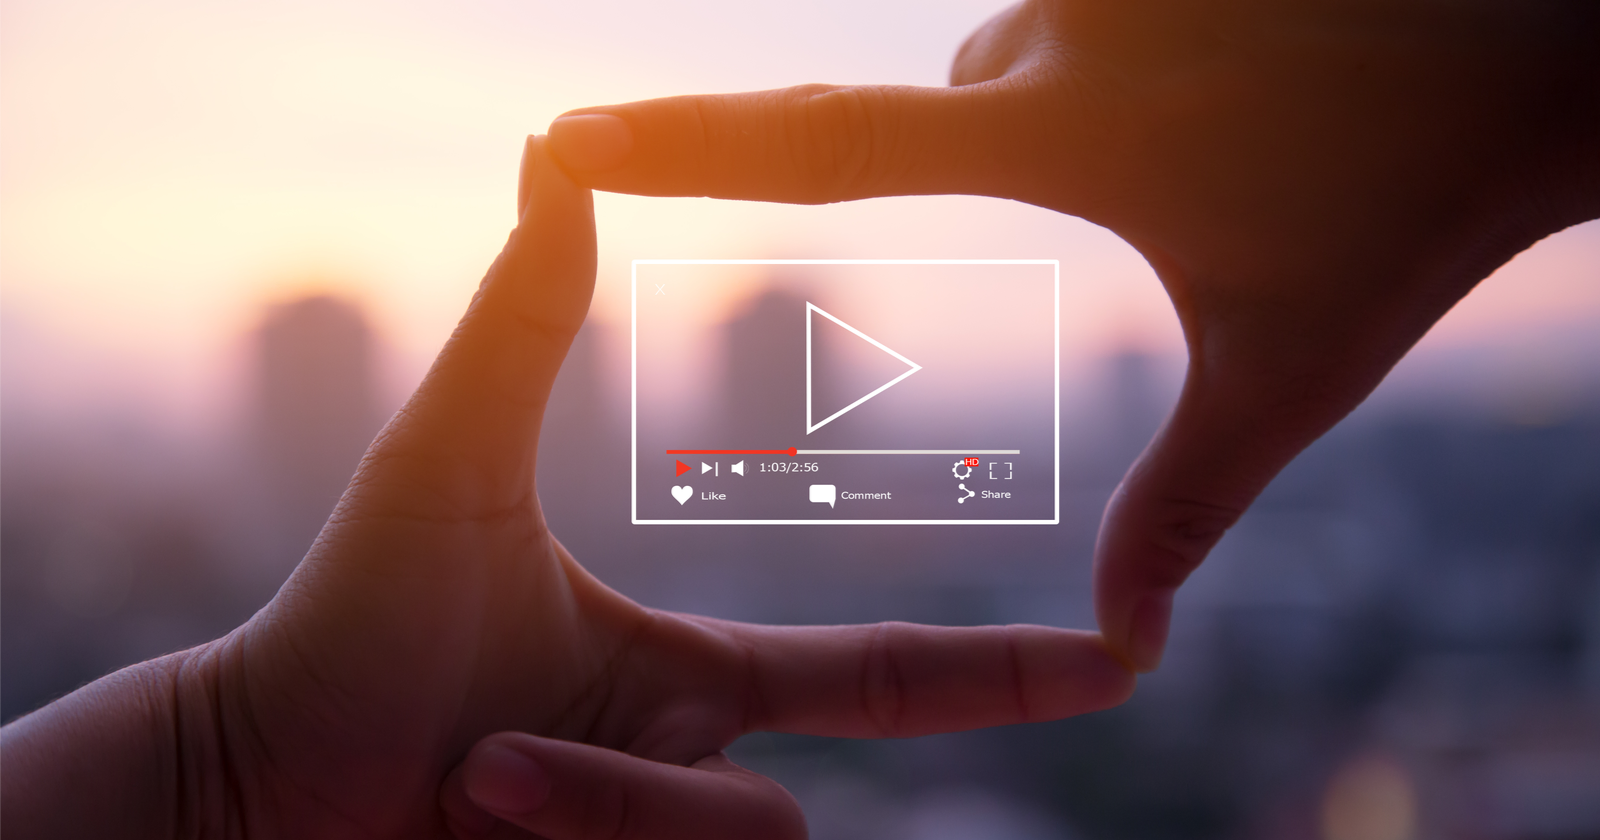 Digital Video is Effective for Building Brands